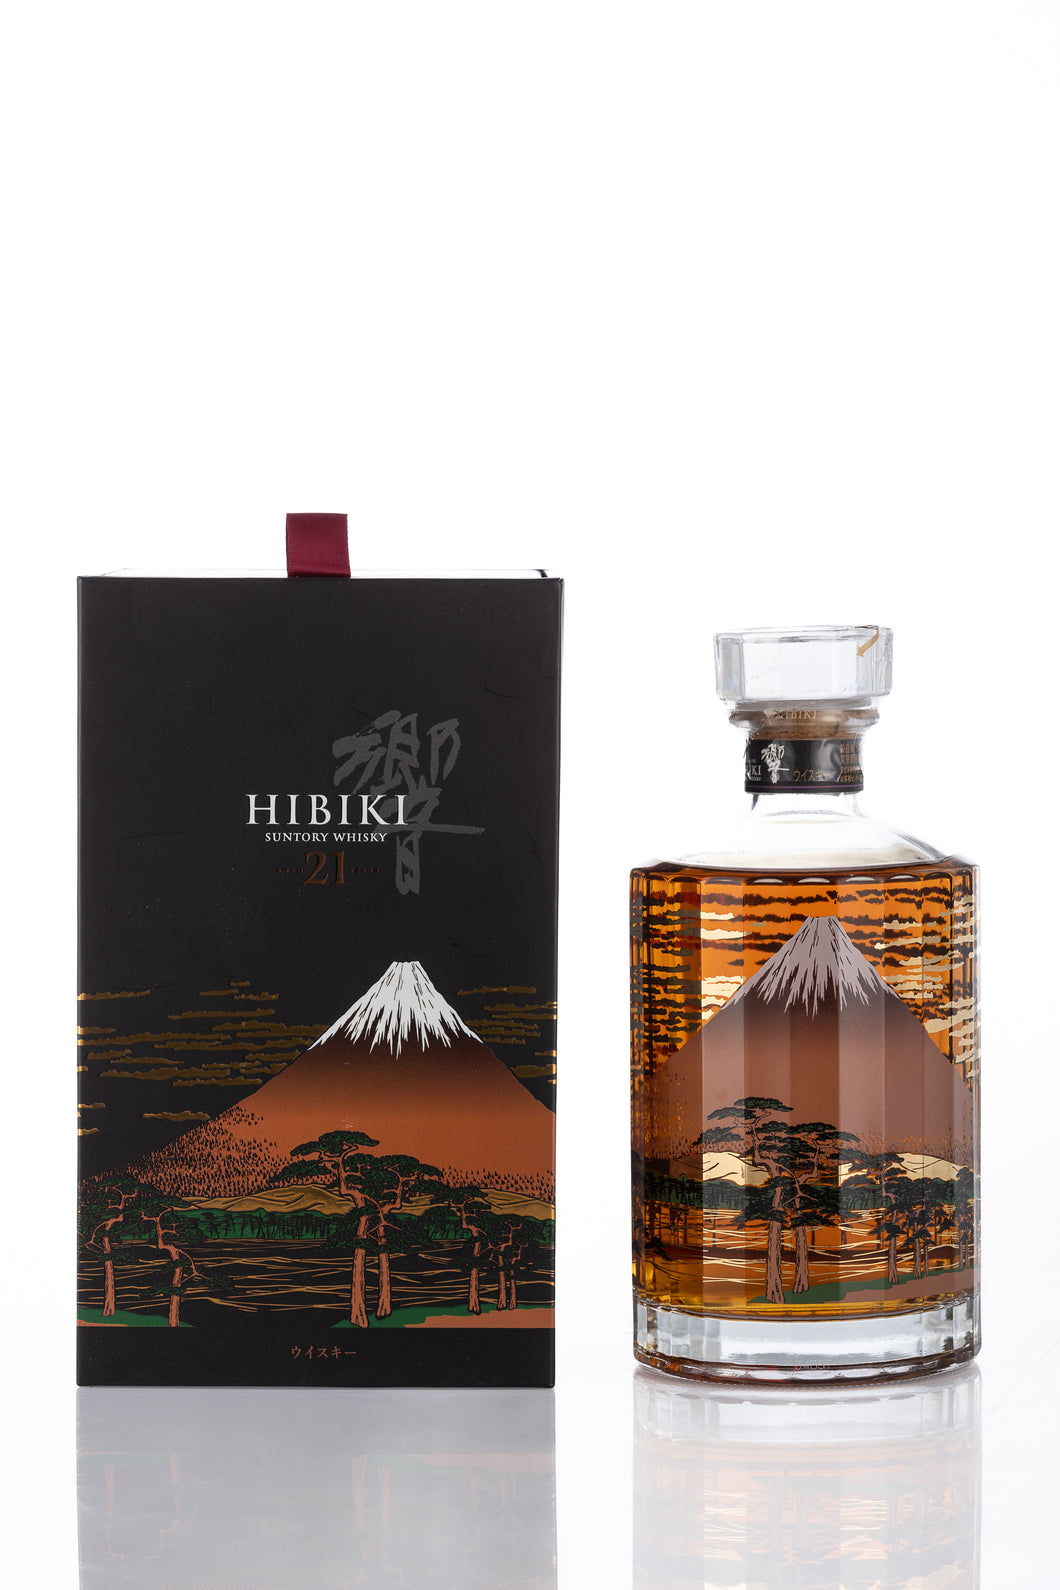 HIBIKI 21 ans 43% - Heritage Whisky